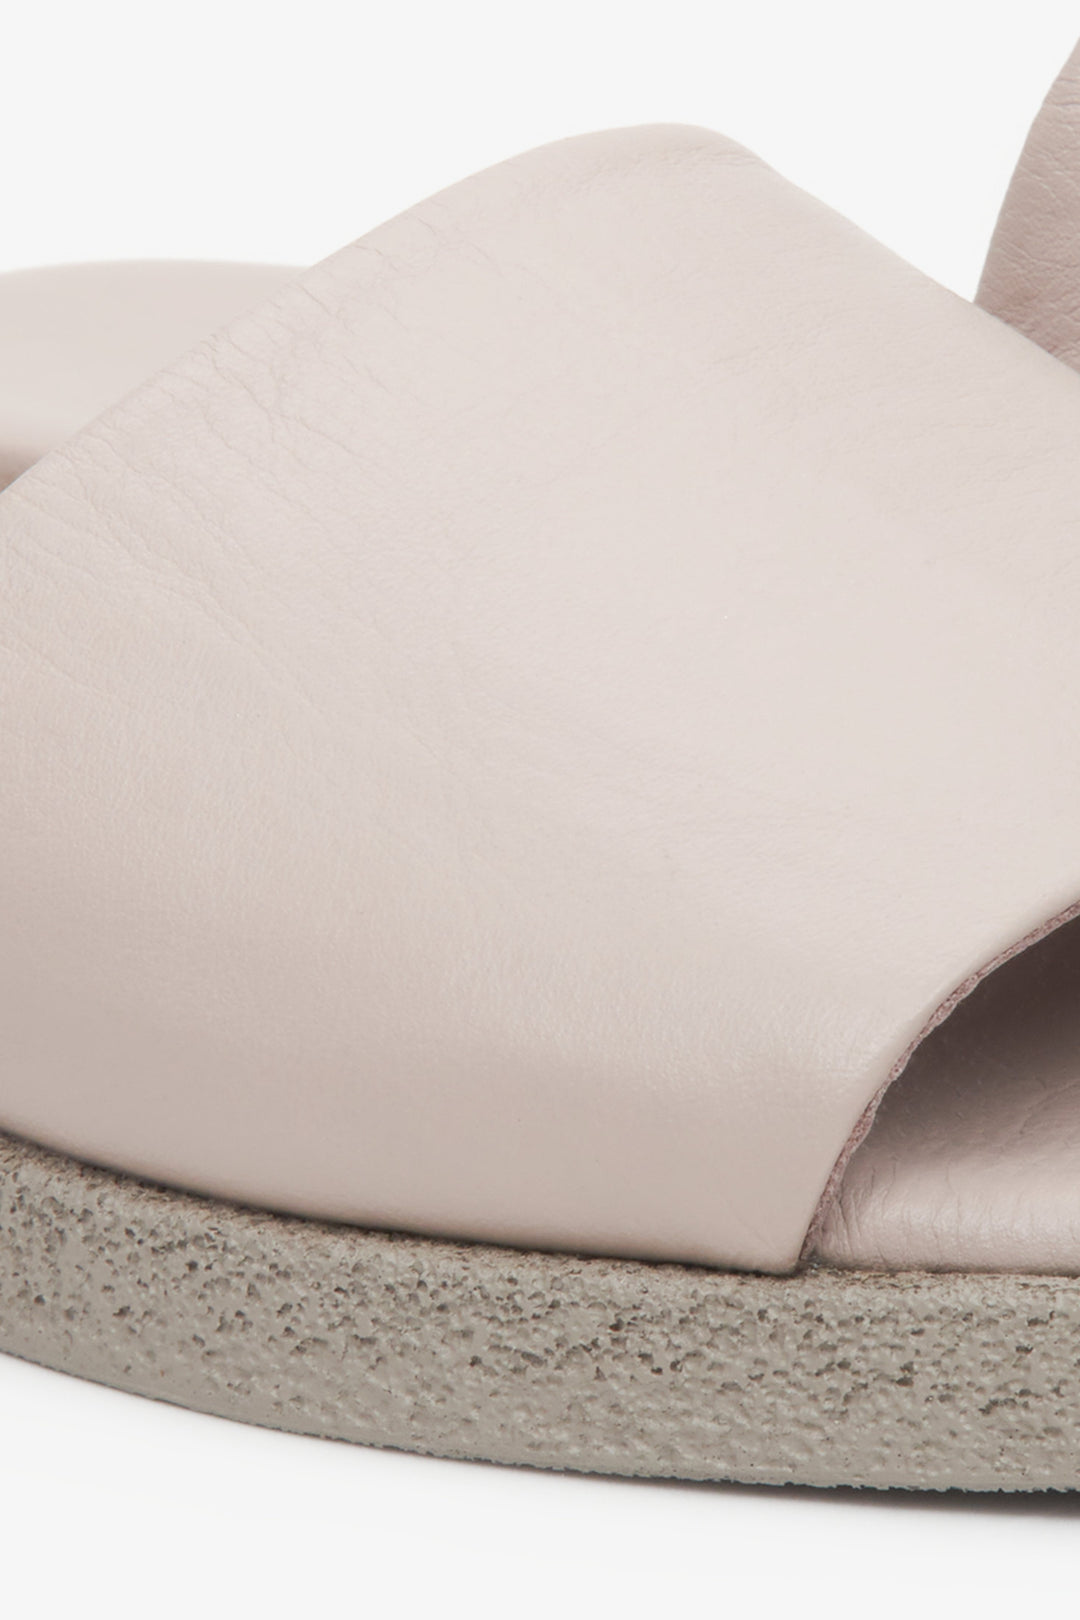 Women's beige Estro flat slides - close up on details.